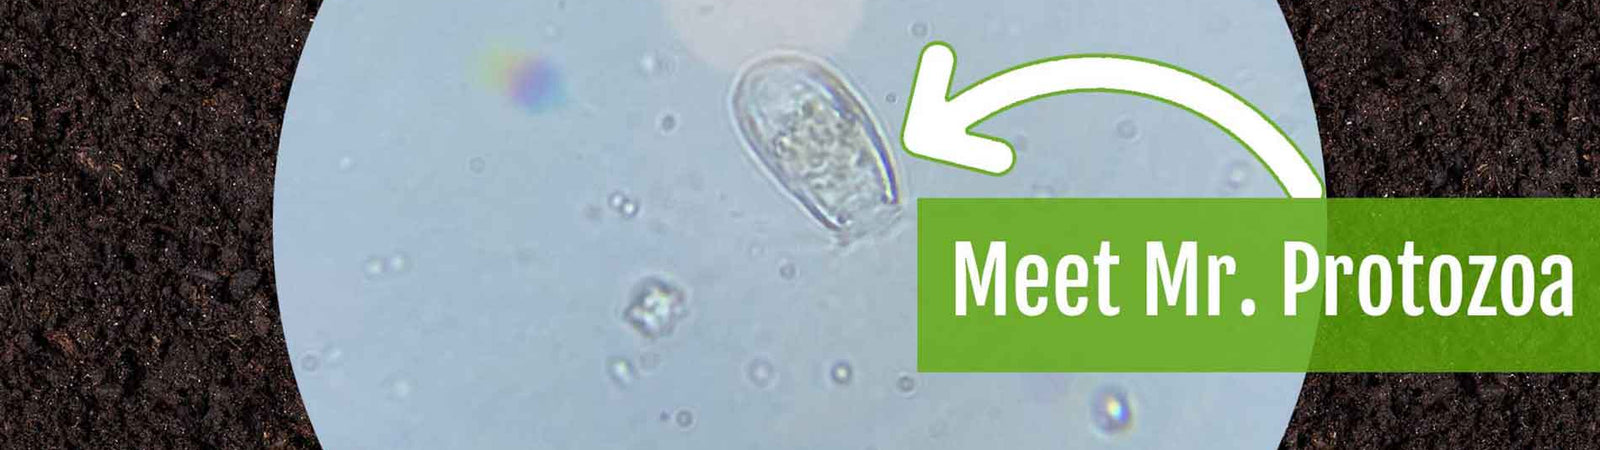 protozoa magnified